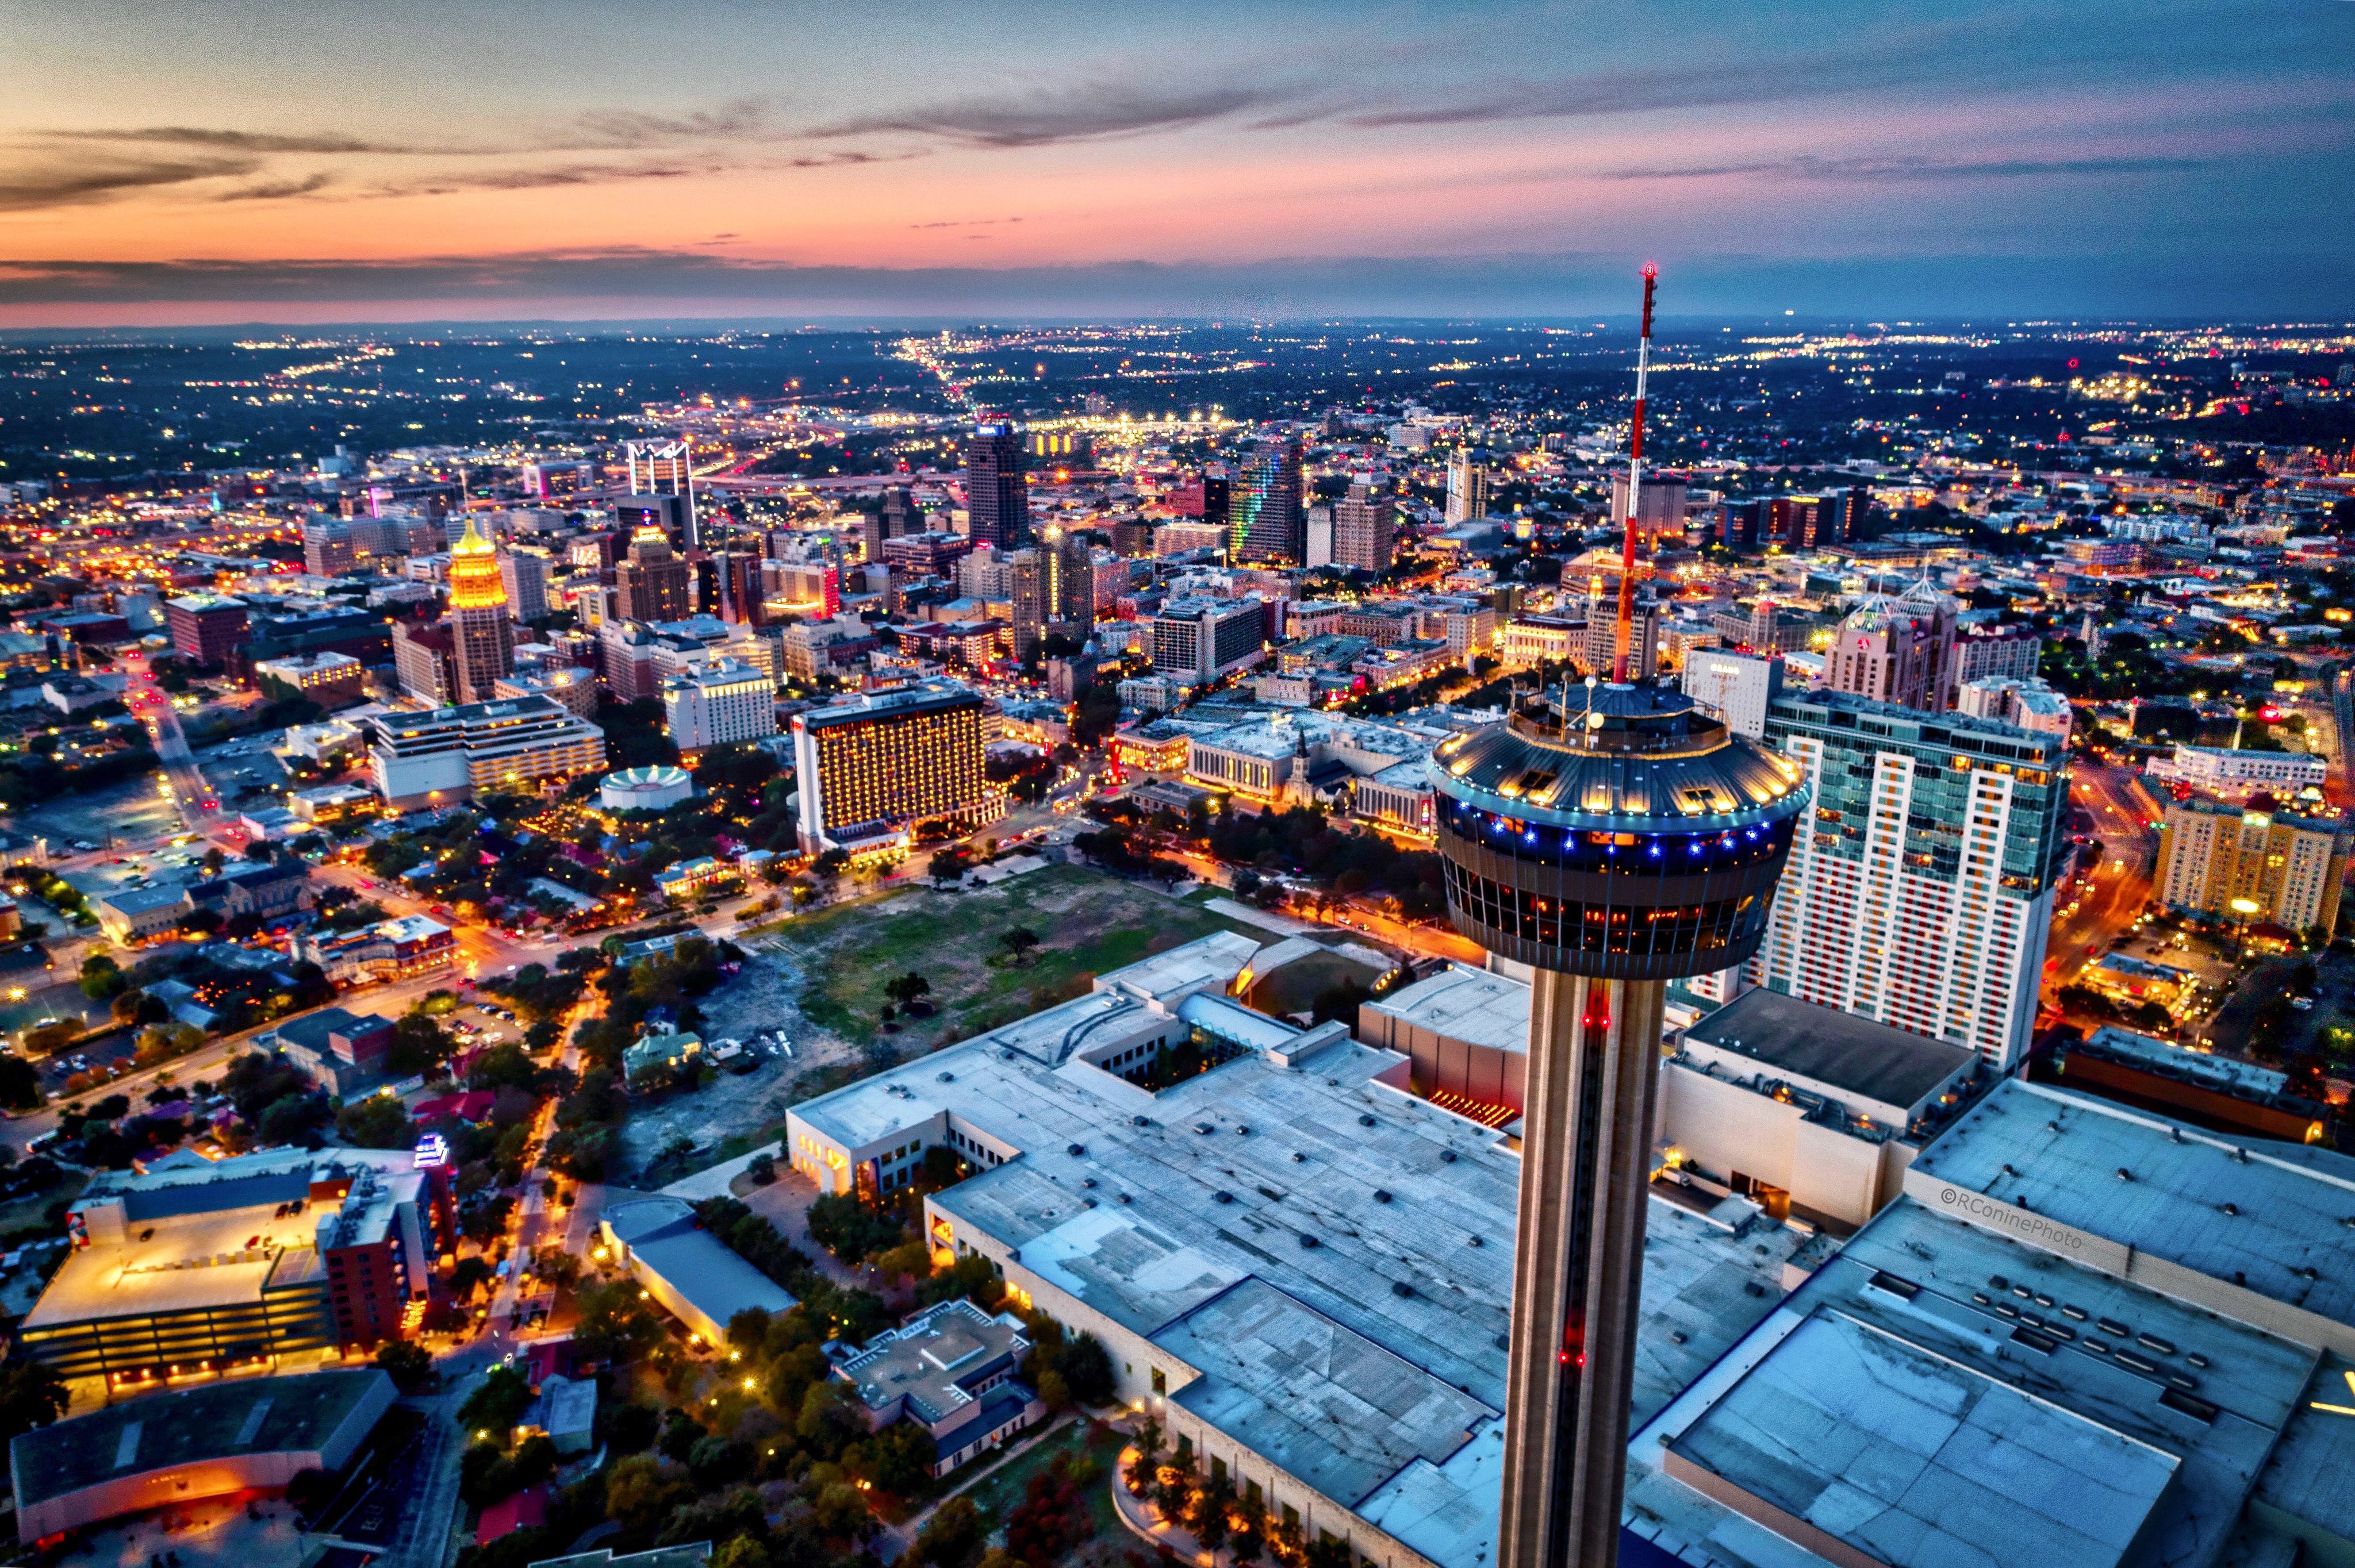 San Antonio's Office of Innovation releases Smart Cities roadmap, initiative